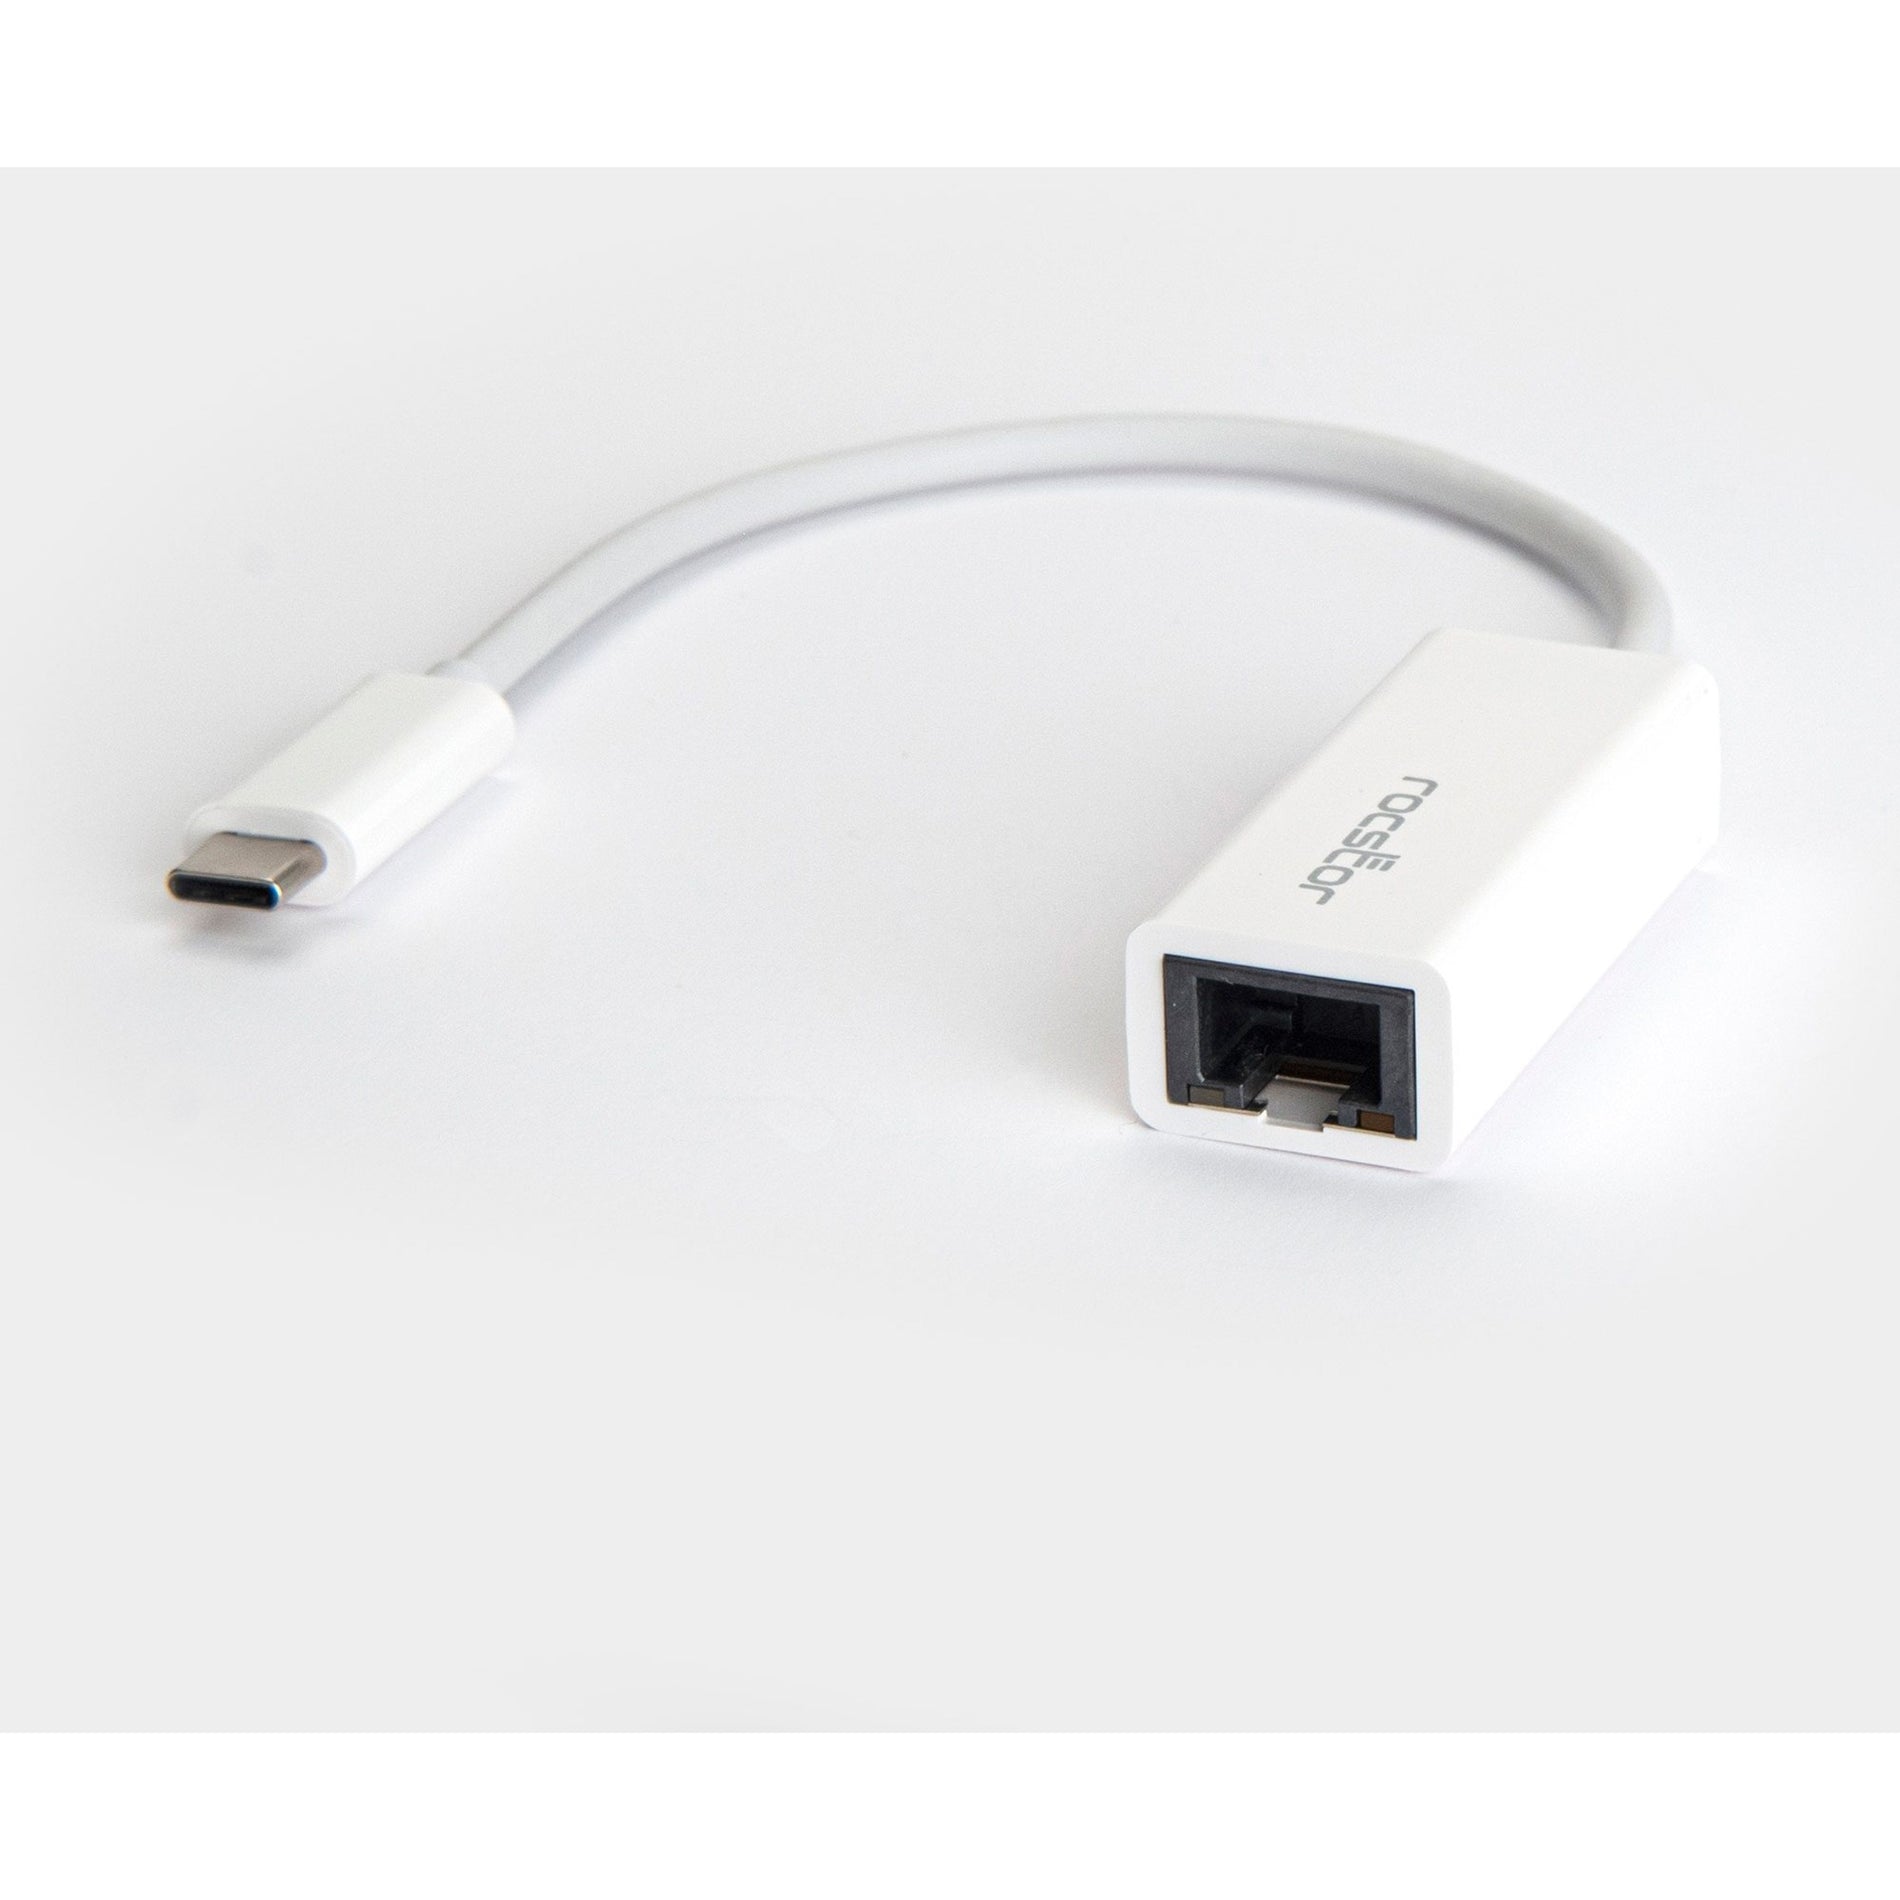 Rocstor Y10A173-W1 محول شبكة USB-C إلى جيجابت 10/100/1000 متميز - أبيض USB-C 3.1 إلى جيجابت 1000 ميجابت  روكستور